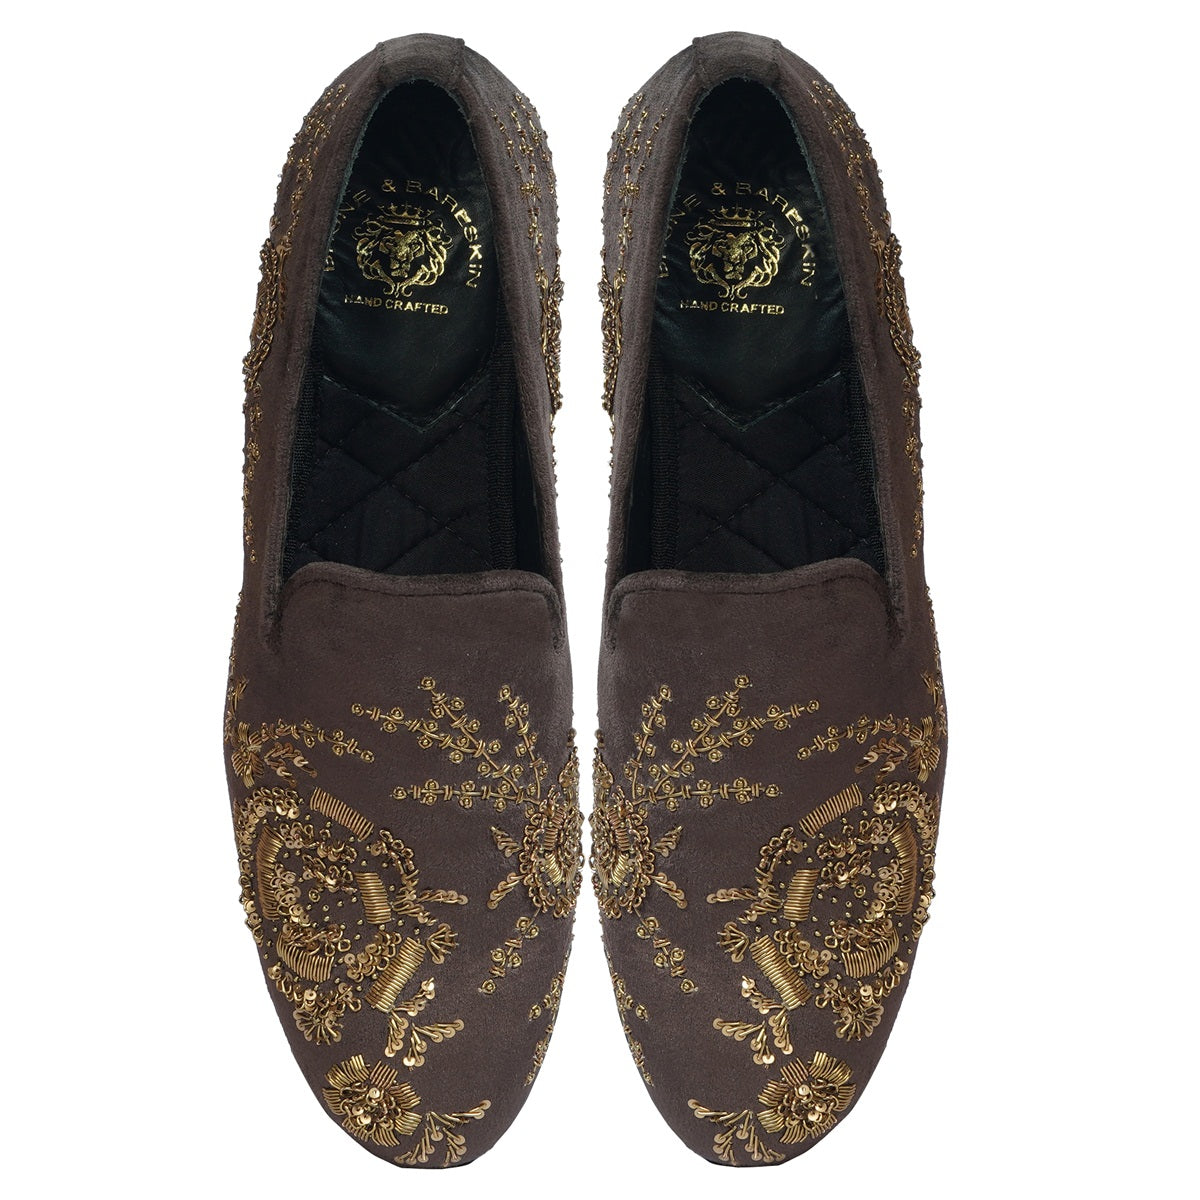 Zardozi Embroidery Slip-On Shoes in Dark Brown Velvet